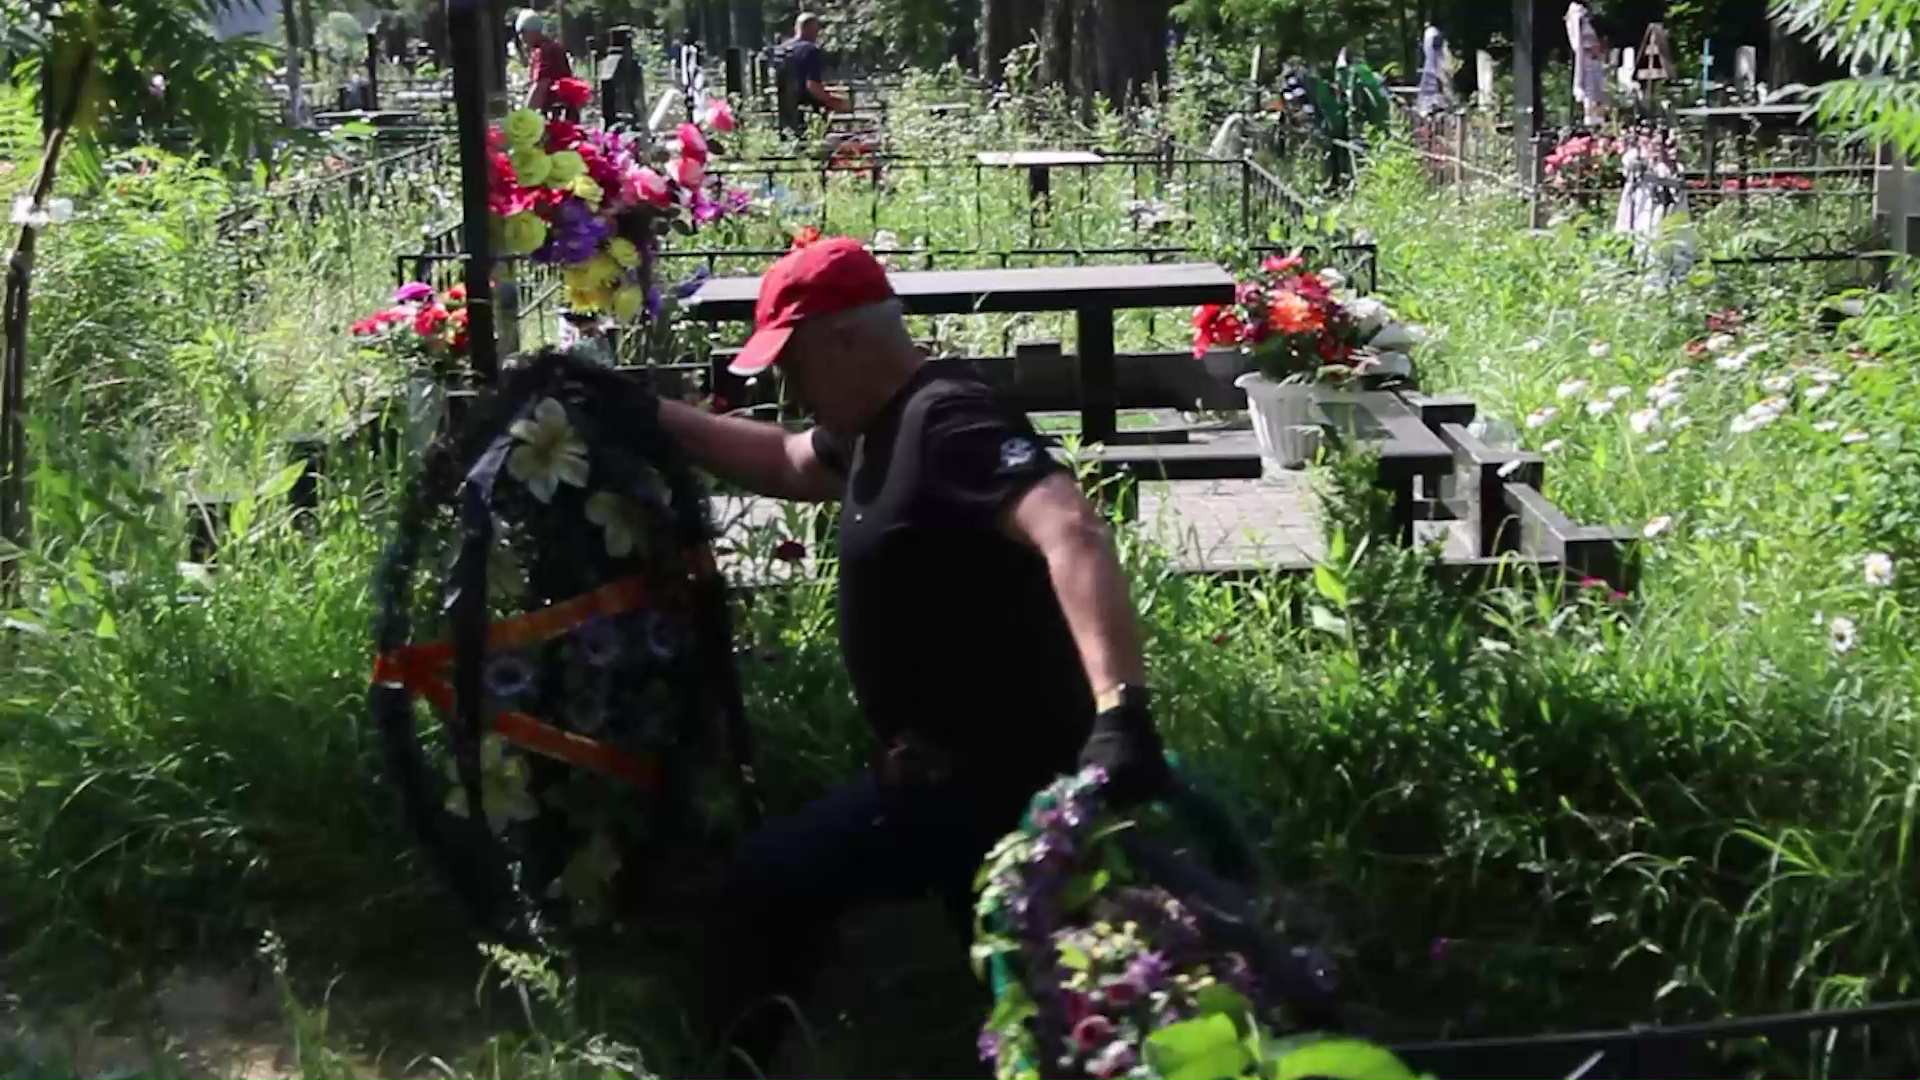 Мусор на кладбище в Клинцах